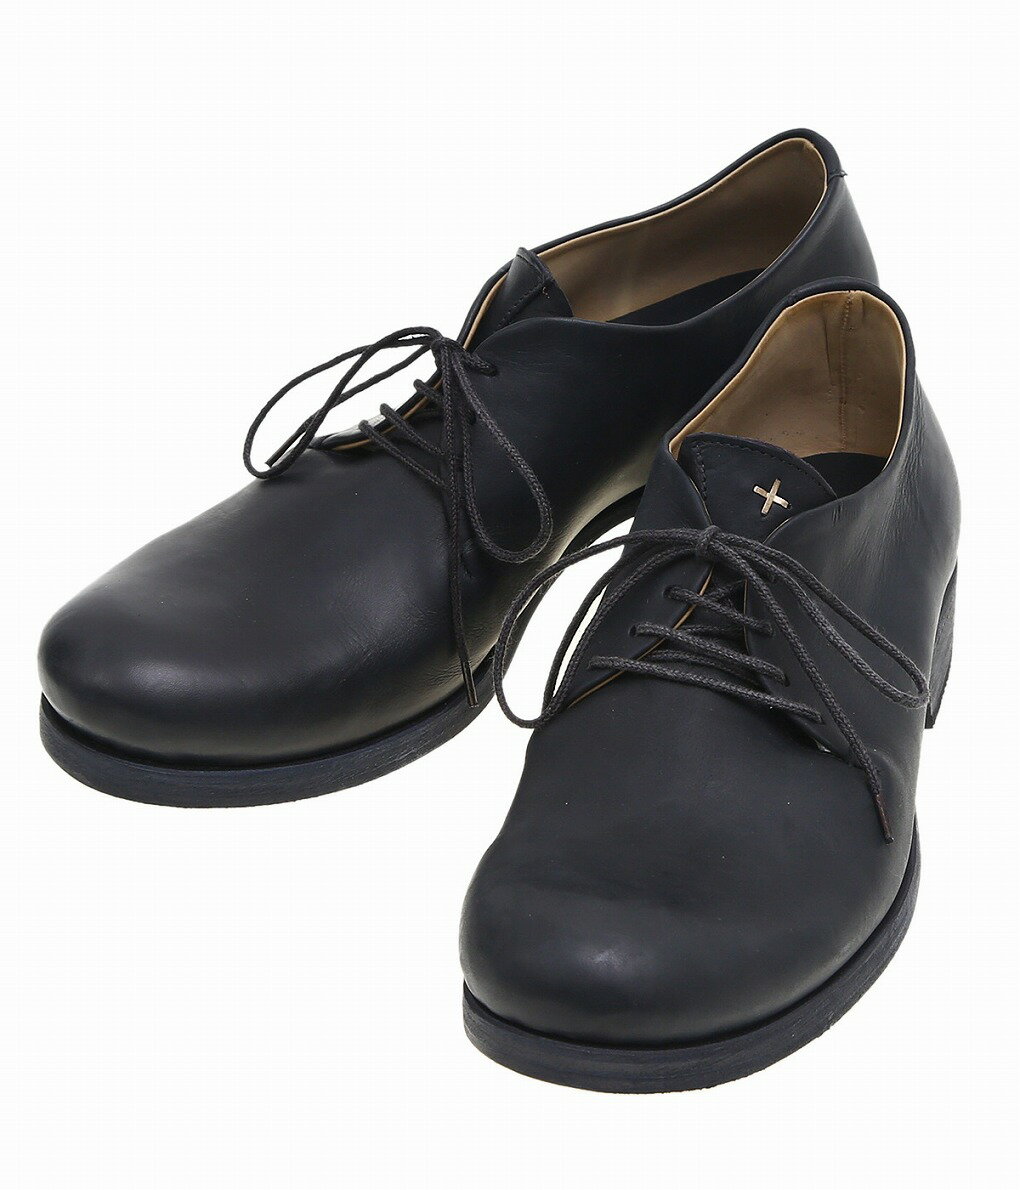 m.a+ / エムエークロス : 1 leather piece derbie : レザーシューズ ワン レザー ピース ダービー 革靴..